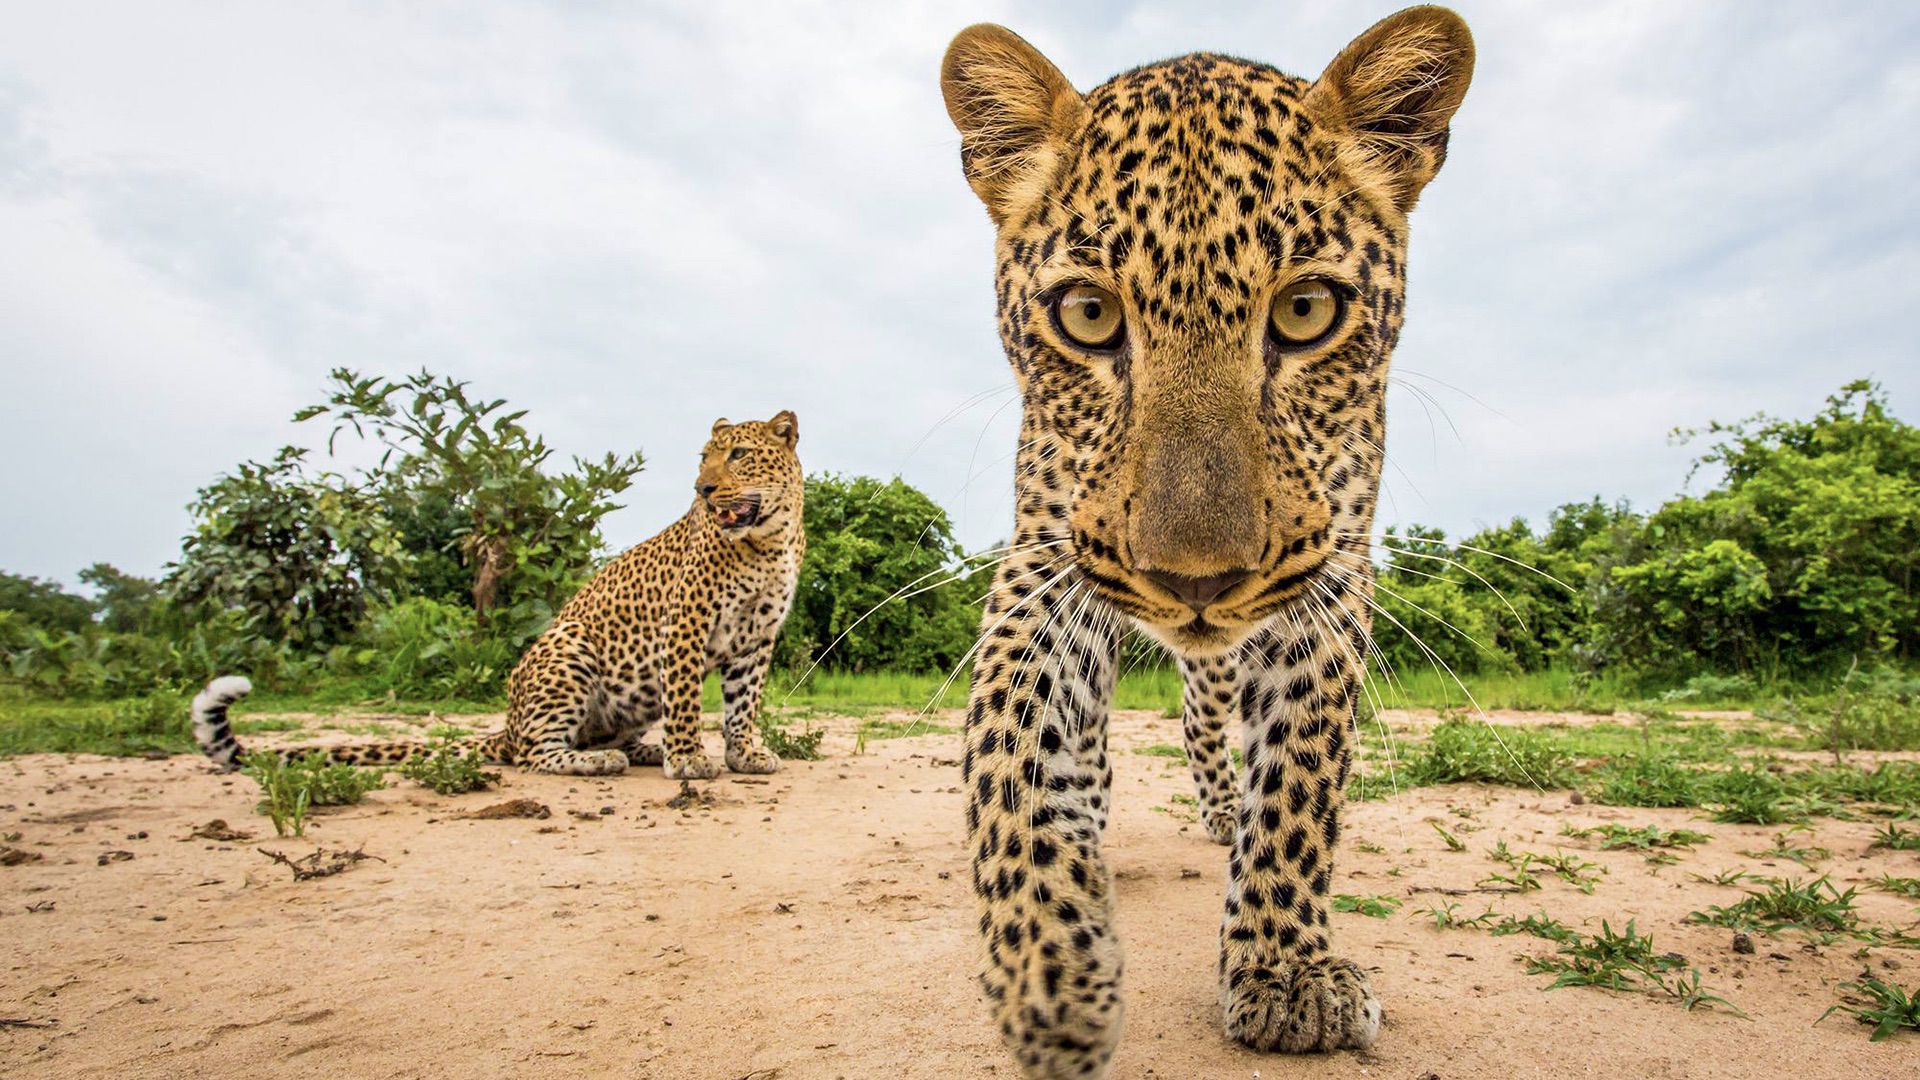  wildlife photos show how beautiful animal 